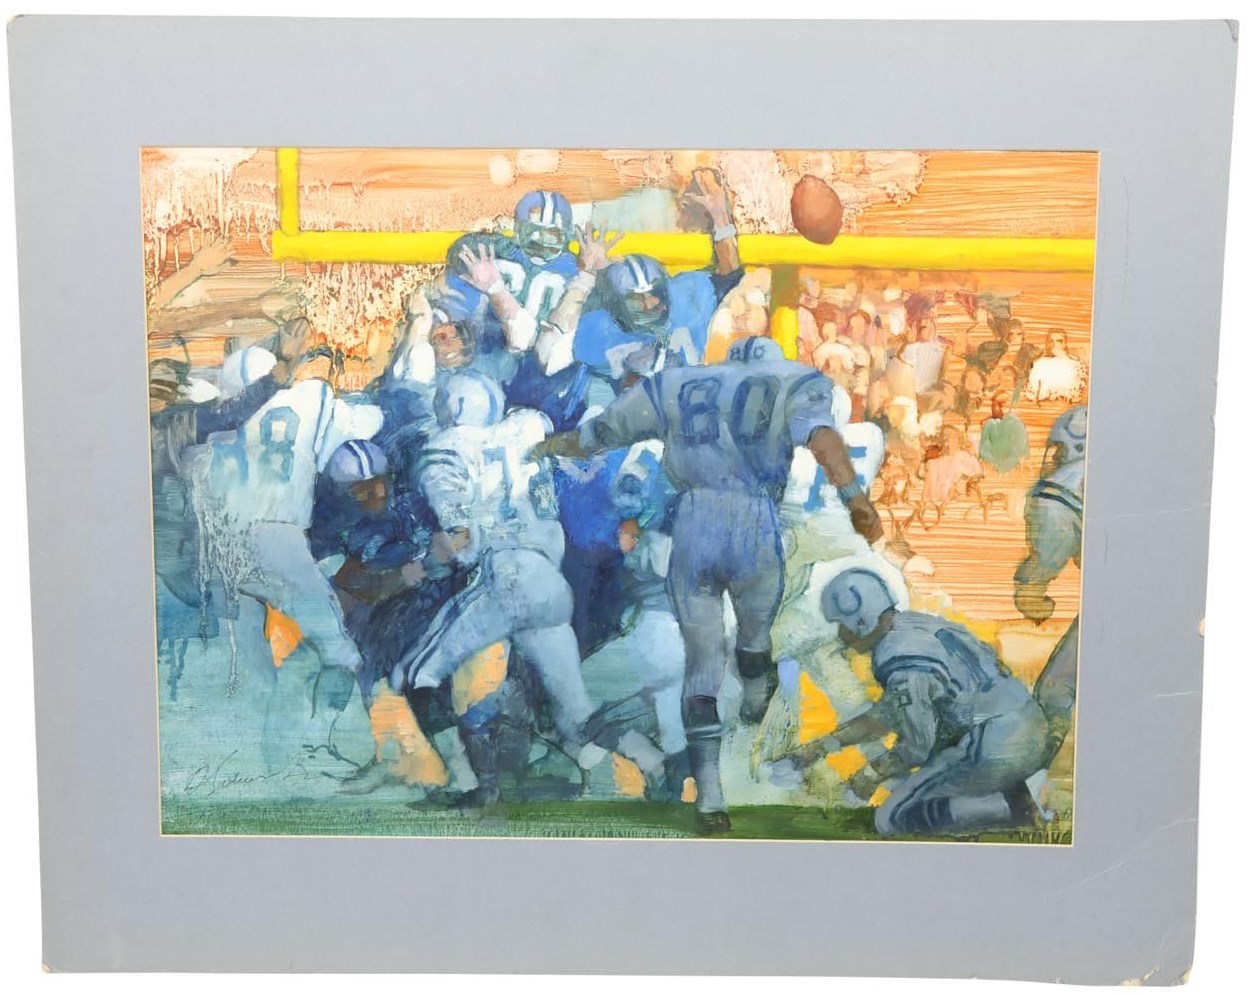 - 1971 Super Bowl V "Field Goal Kick" Watercolor by Daniel Schwartz - Published in Super Bowl IX Program